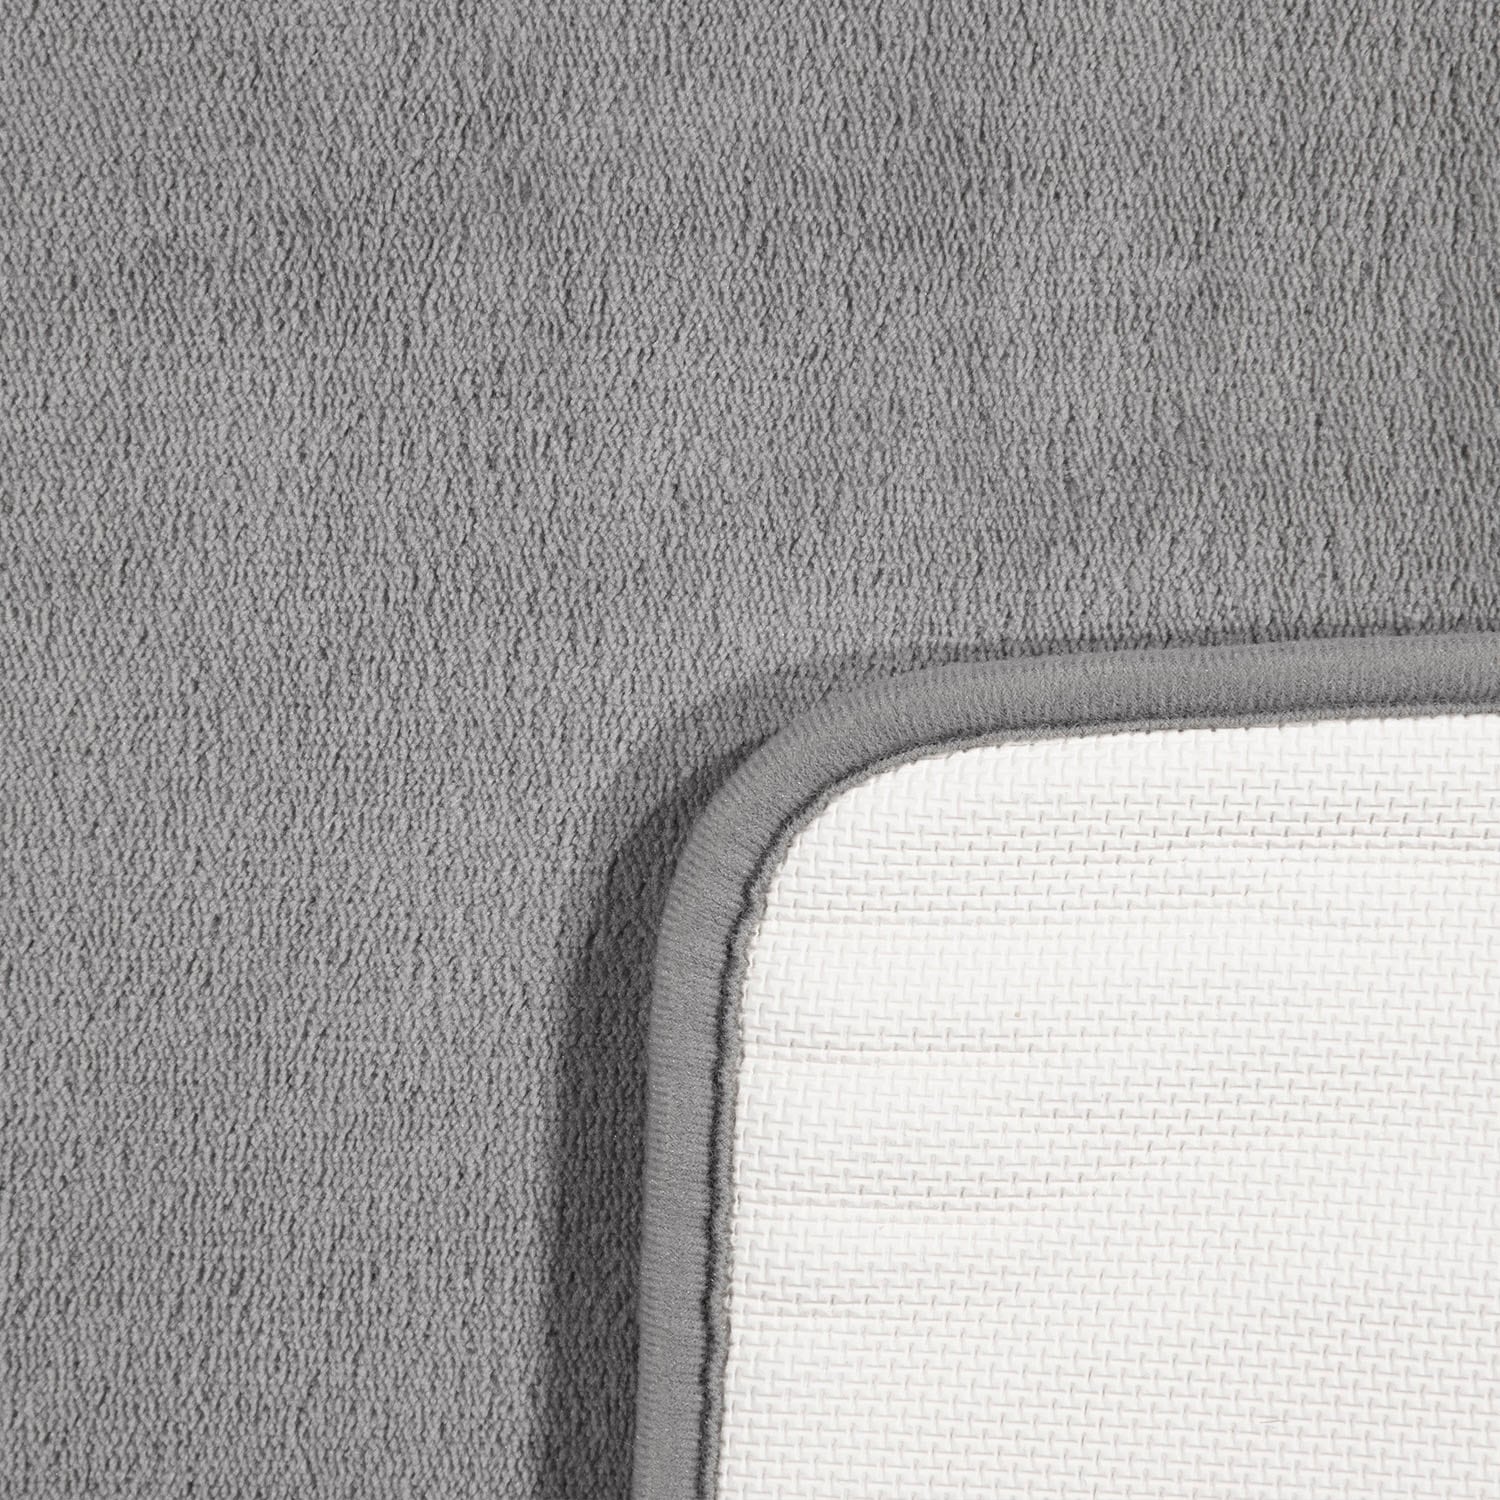 Paco Home Badematte »Corby 255«, Höhe 13 mm, rutschhemmend beschichtet, fußbodenheizungsgeeignet, Badteppich, Uni Farben, Memory-Foam Effekt